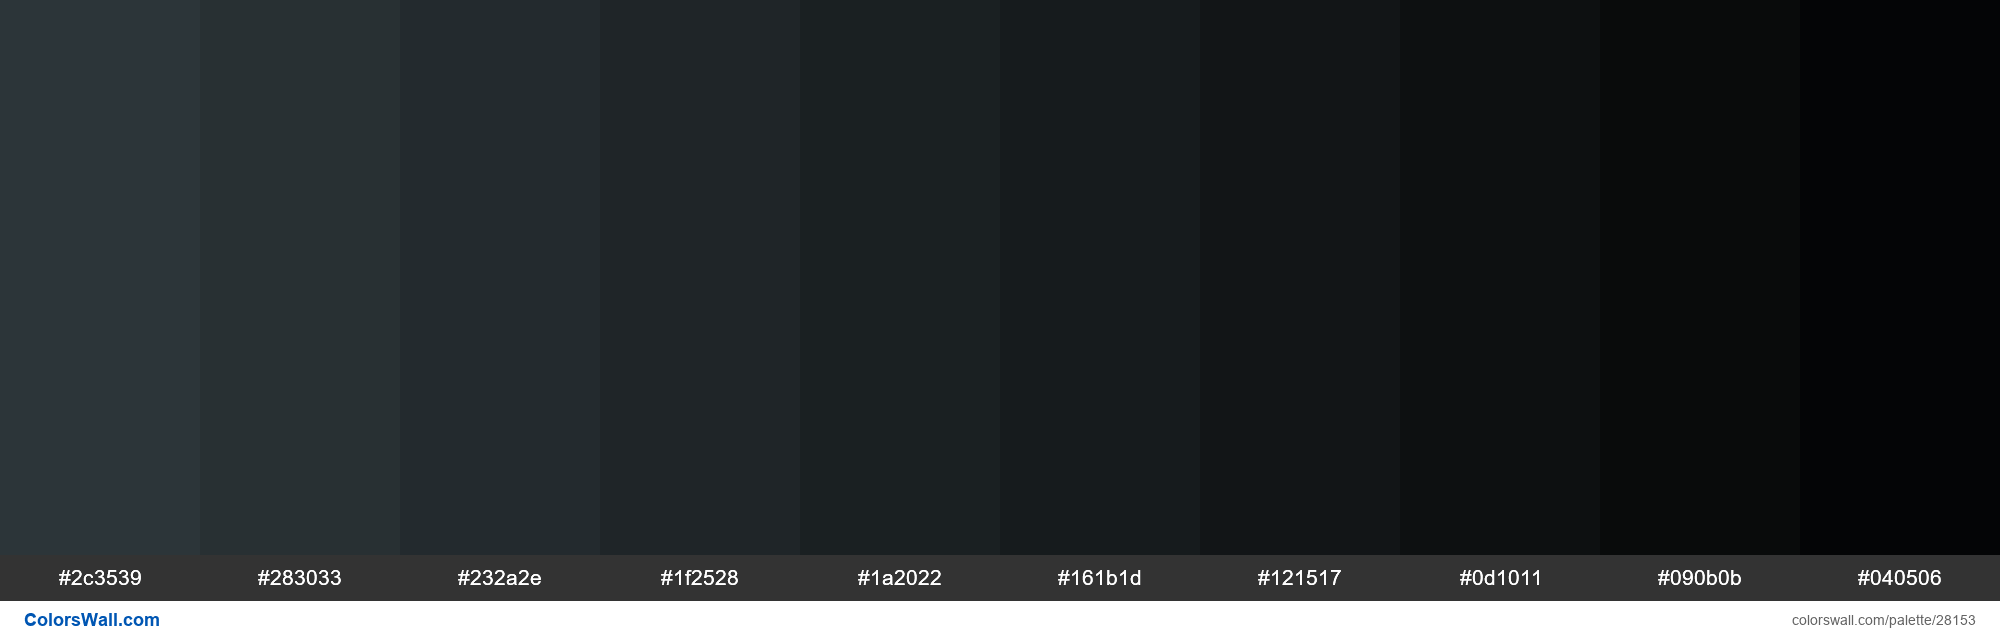 colorswall on X: Shades of Gunmetal color #2C3539 hex #2c3539, #283033,  #232a2e, #1f2528, #1a2022, #161b1d, #121517, #0d1011, #090b0b, #040506 # colors #palette   / X